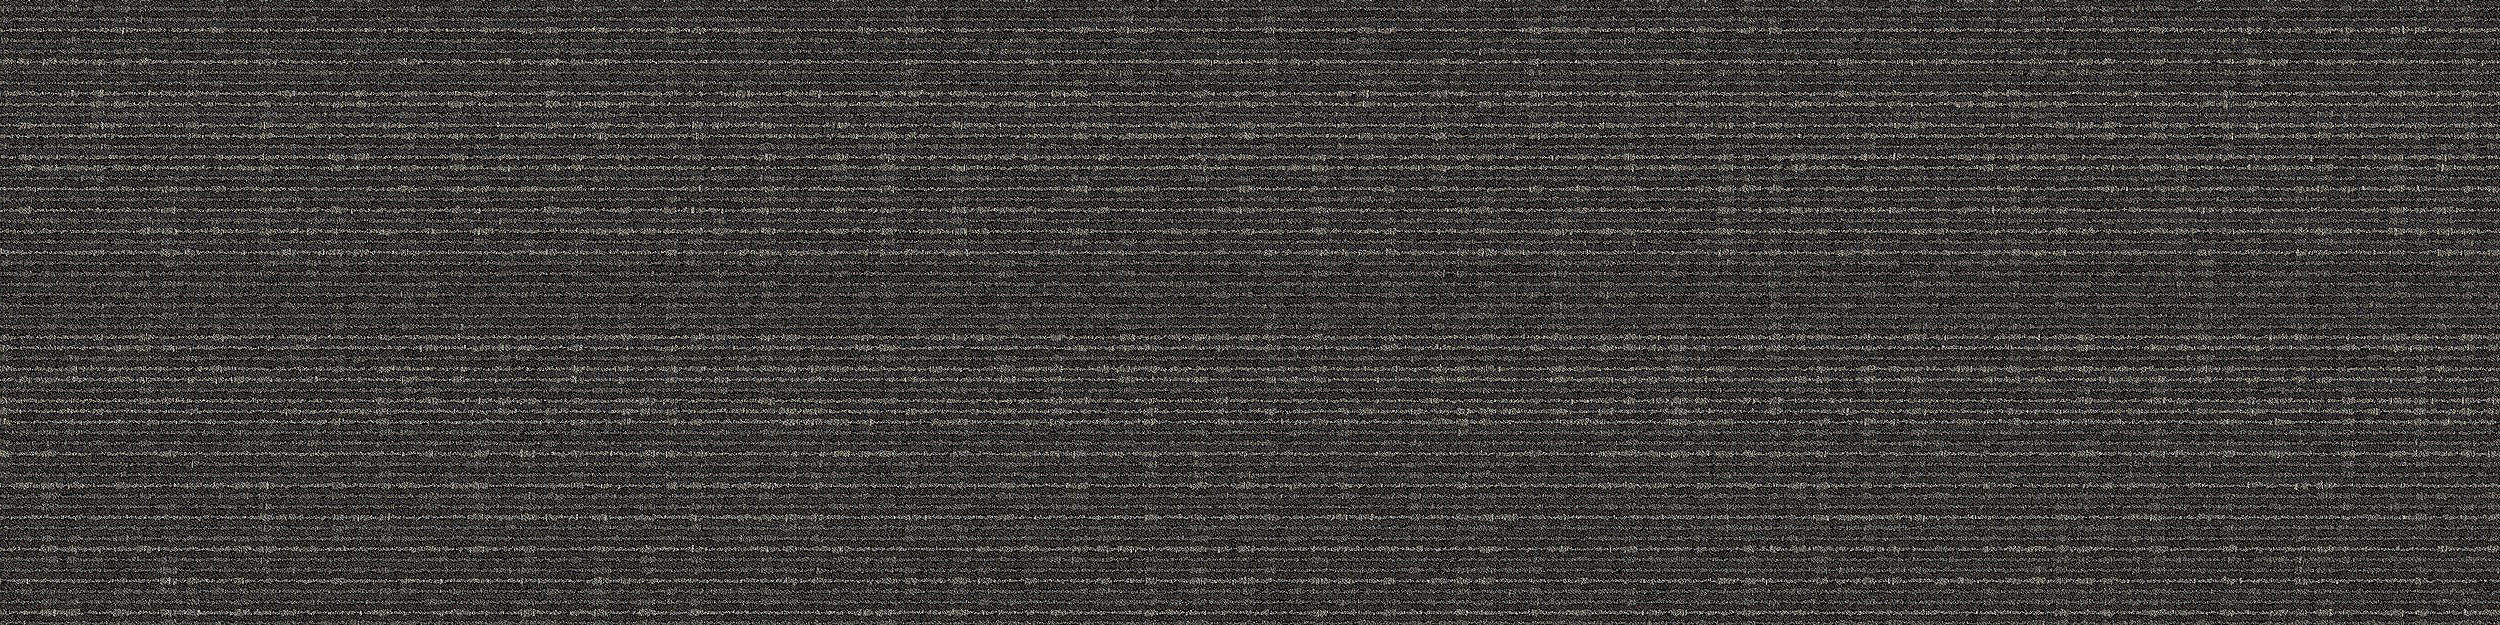 Shishu Stitch Carpet Tile In Shade imagen número 4